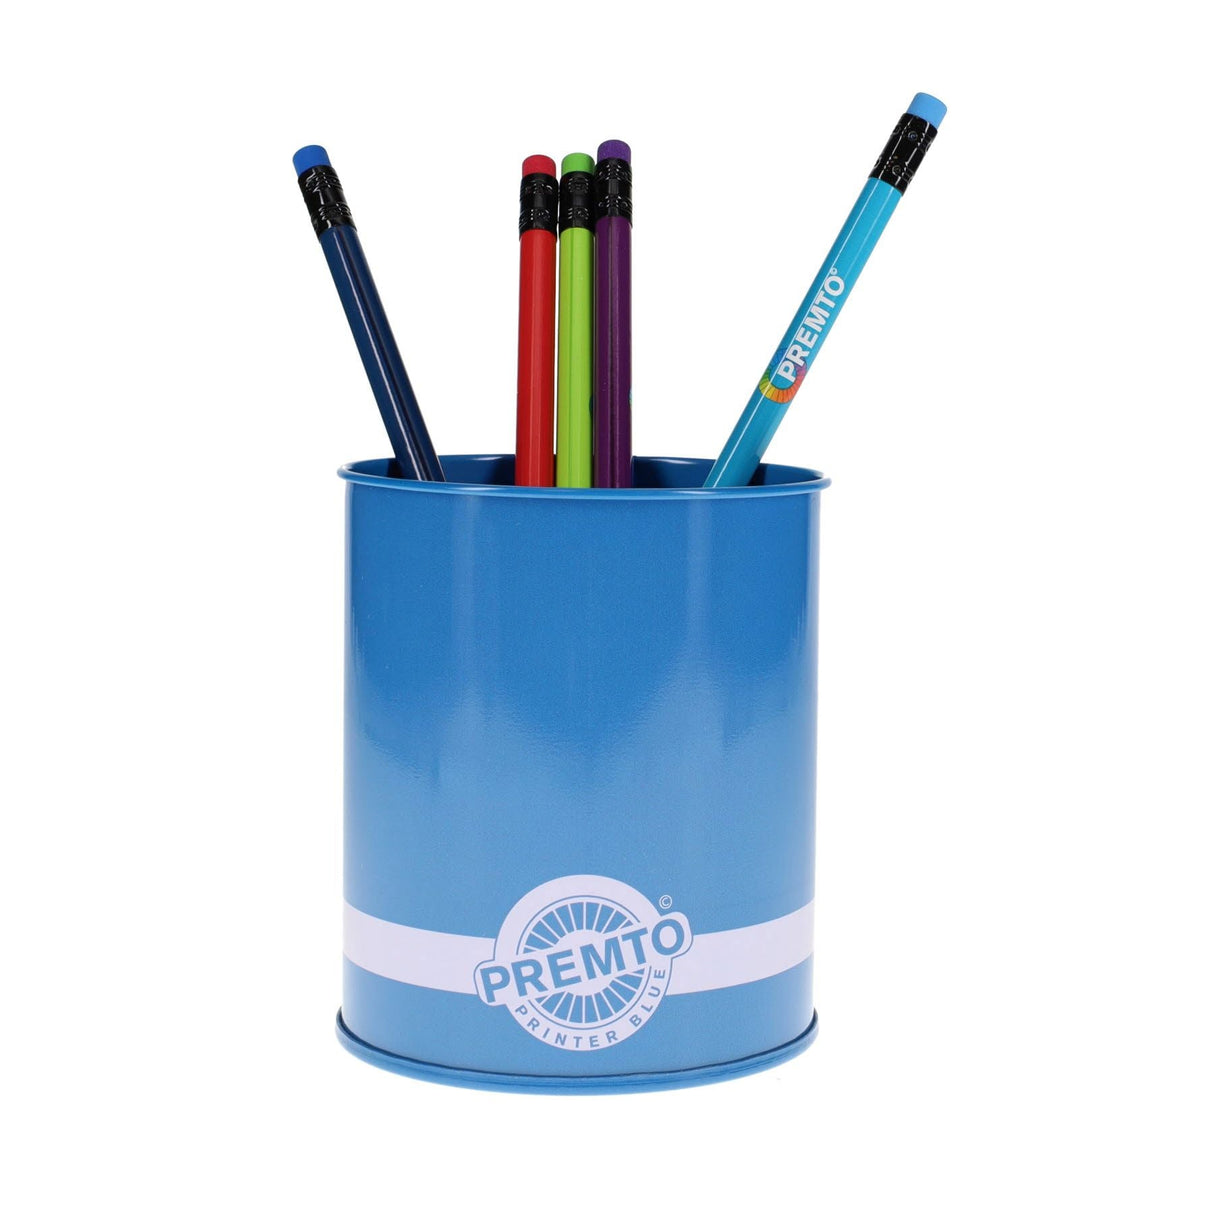 Premto Tin Pencil Pot - Printer Blue-Desk Tidy-Premto|StationeryShop.co.uk